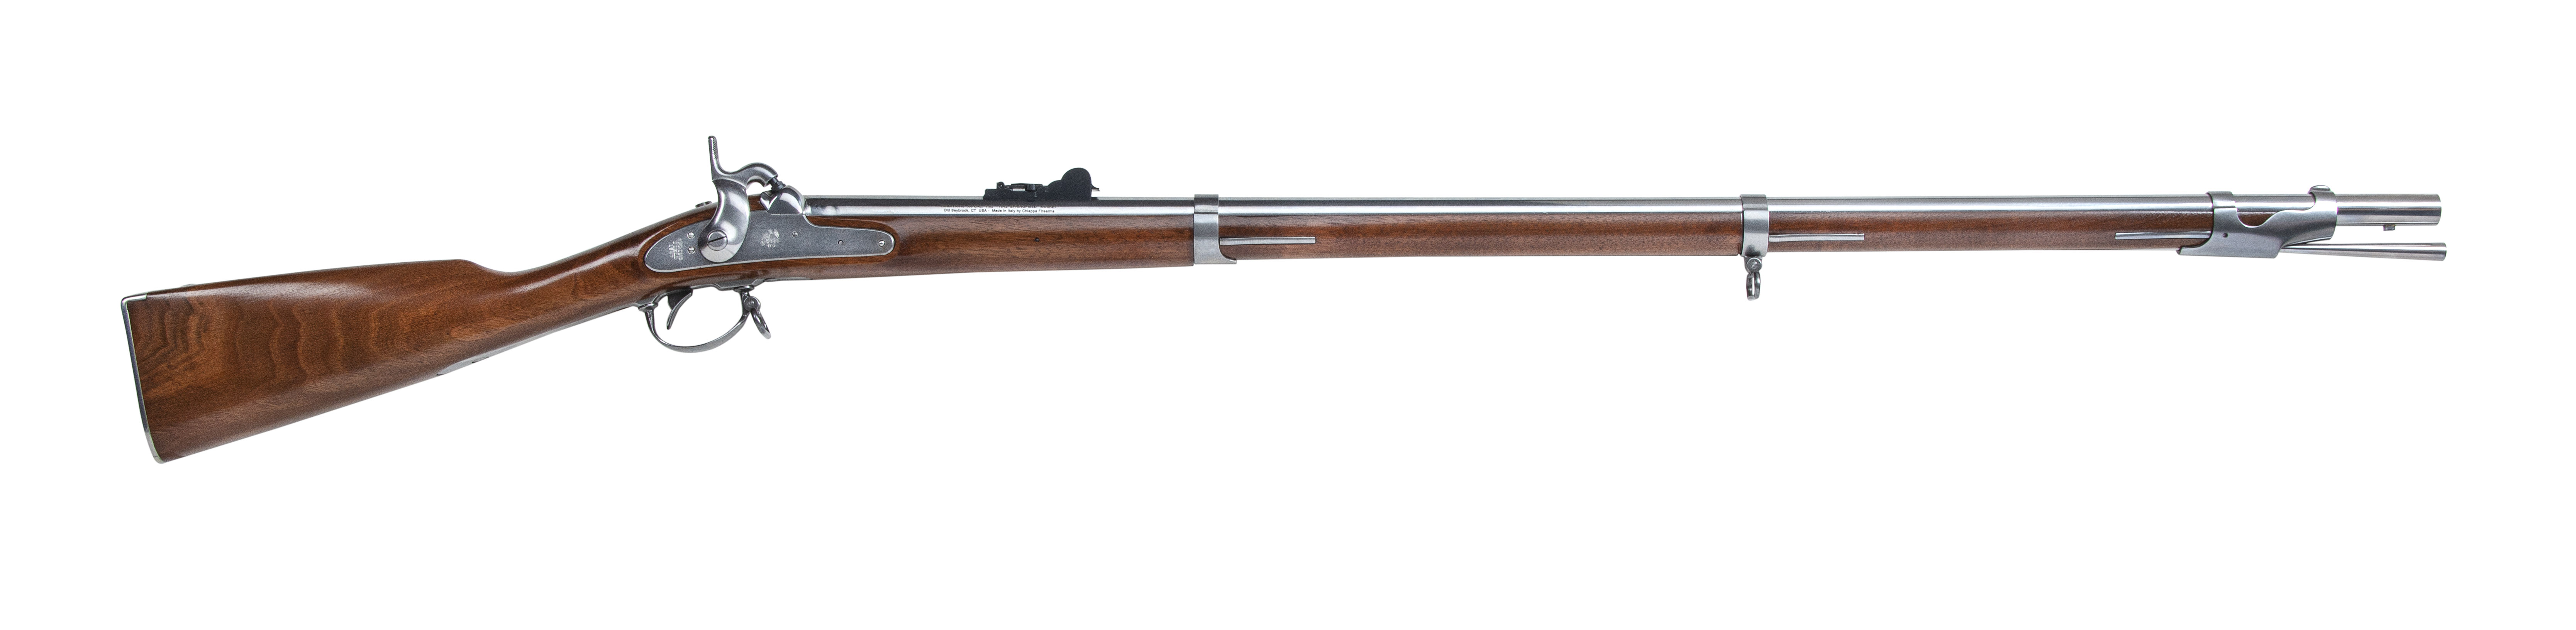 1842 Springfield Musket .69 Cal Rifled R184205